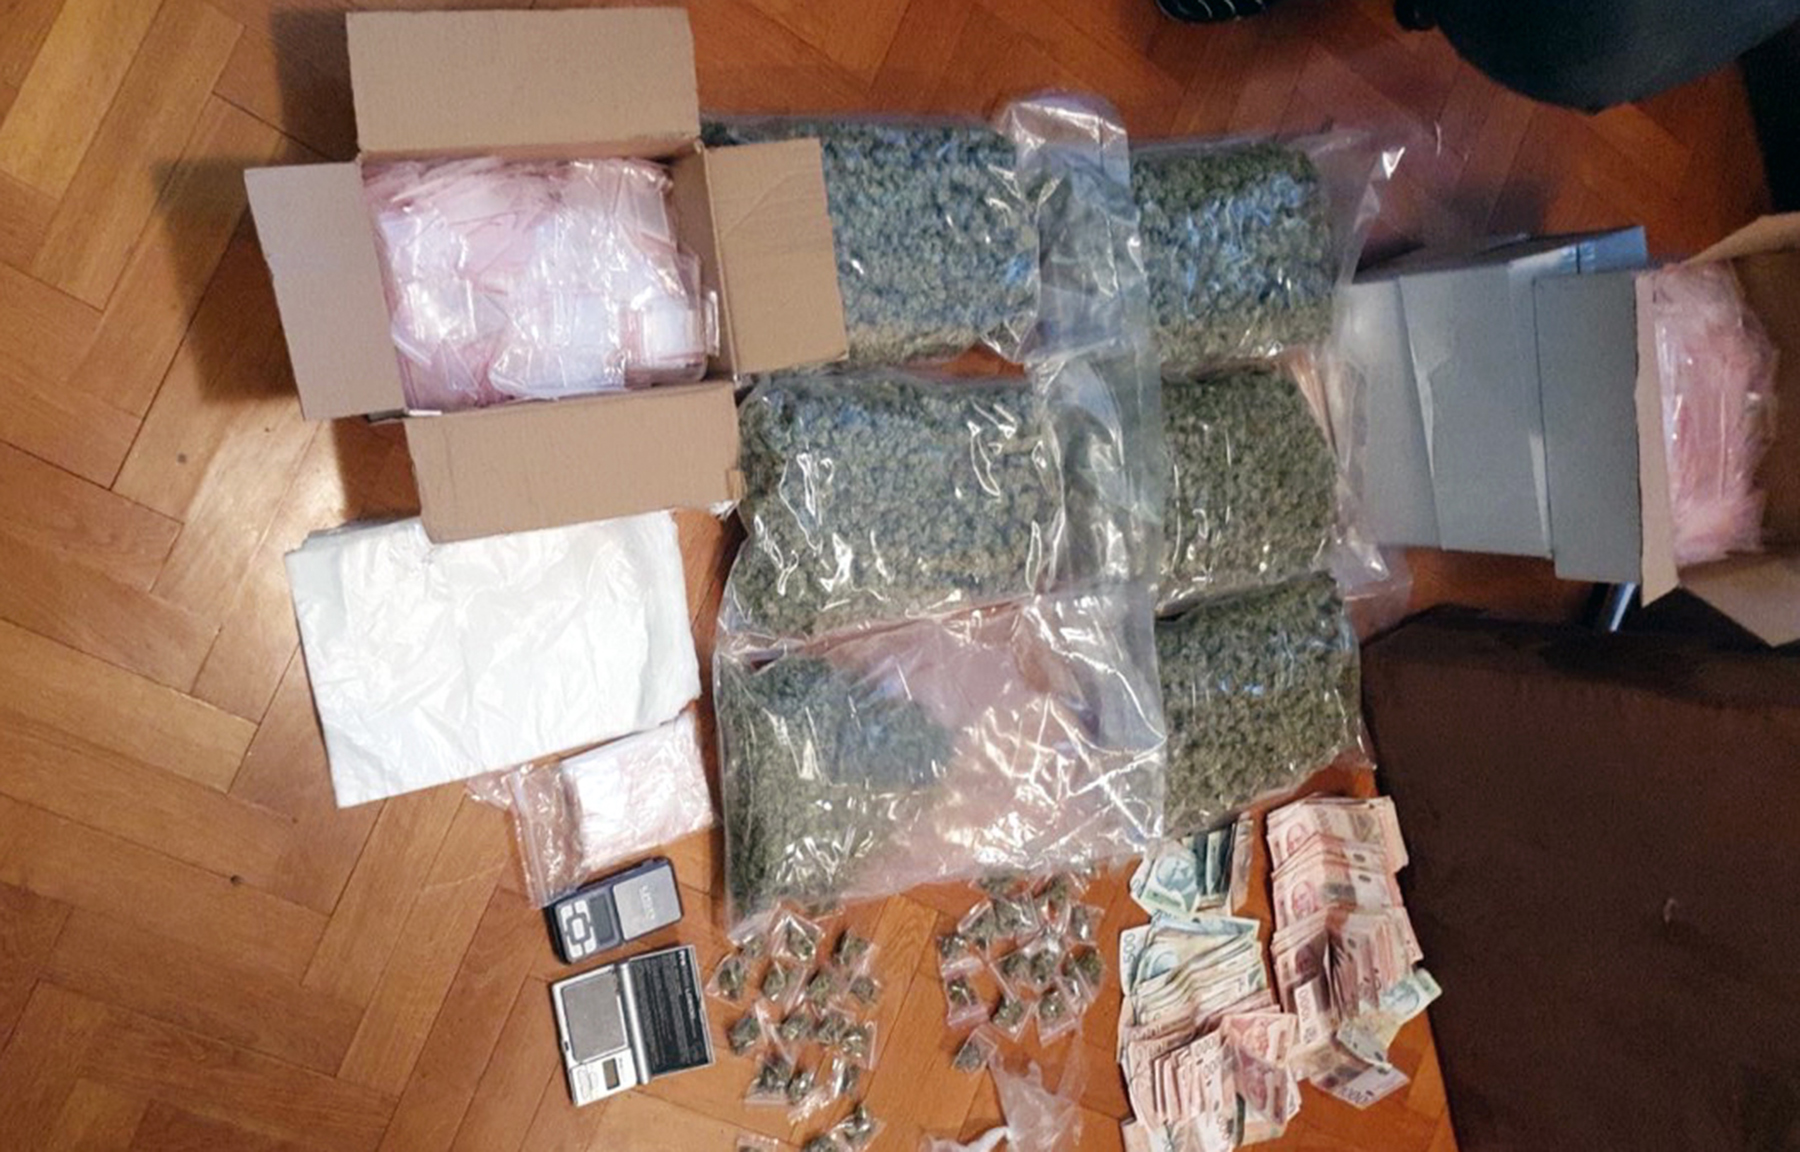  Zaplenjeno 2,7 kilograma marihuane i uhapšen osumnjičeni